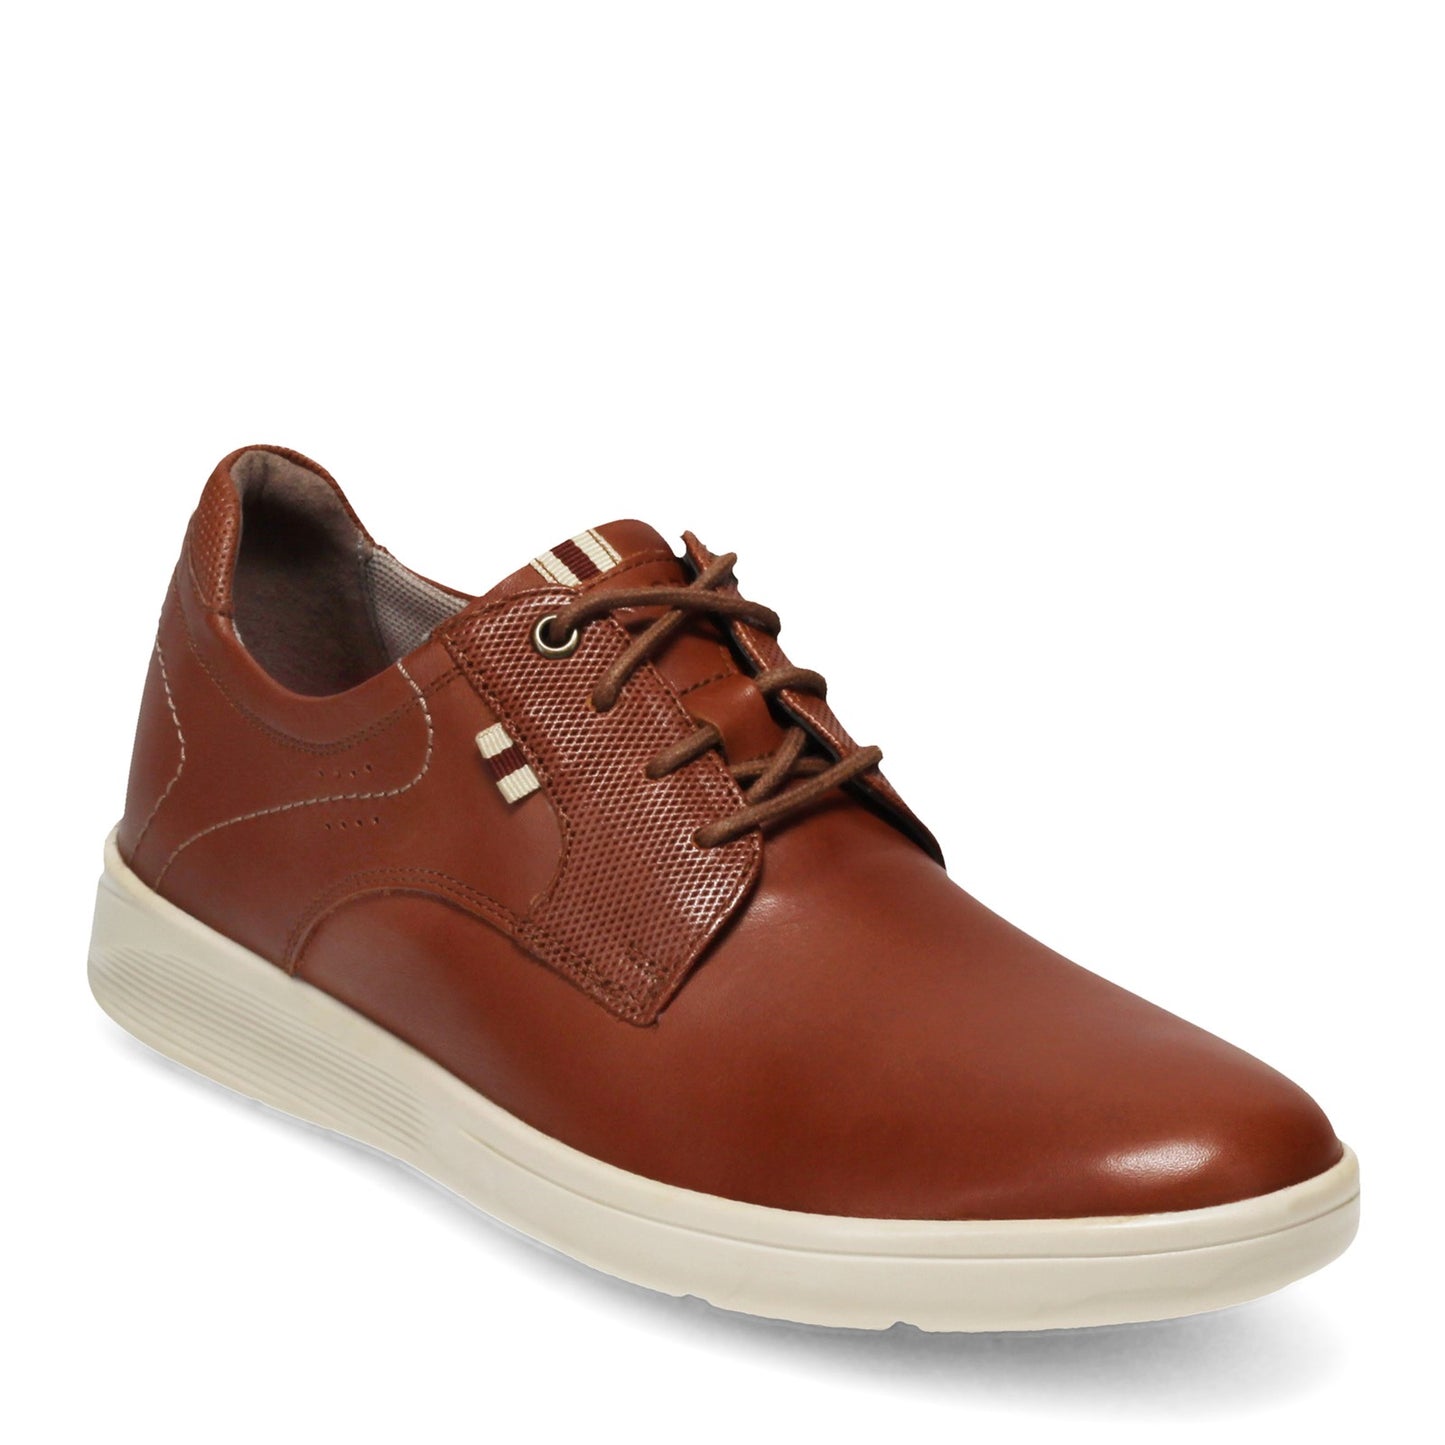 Peltz Shoes  Men's Rockport Caldwell Plain Toe Oxford TAN CI4578